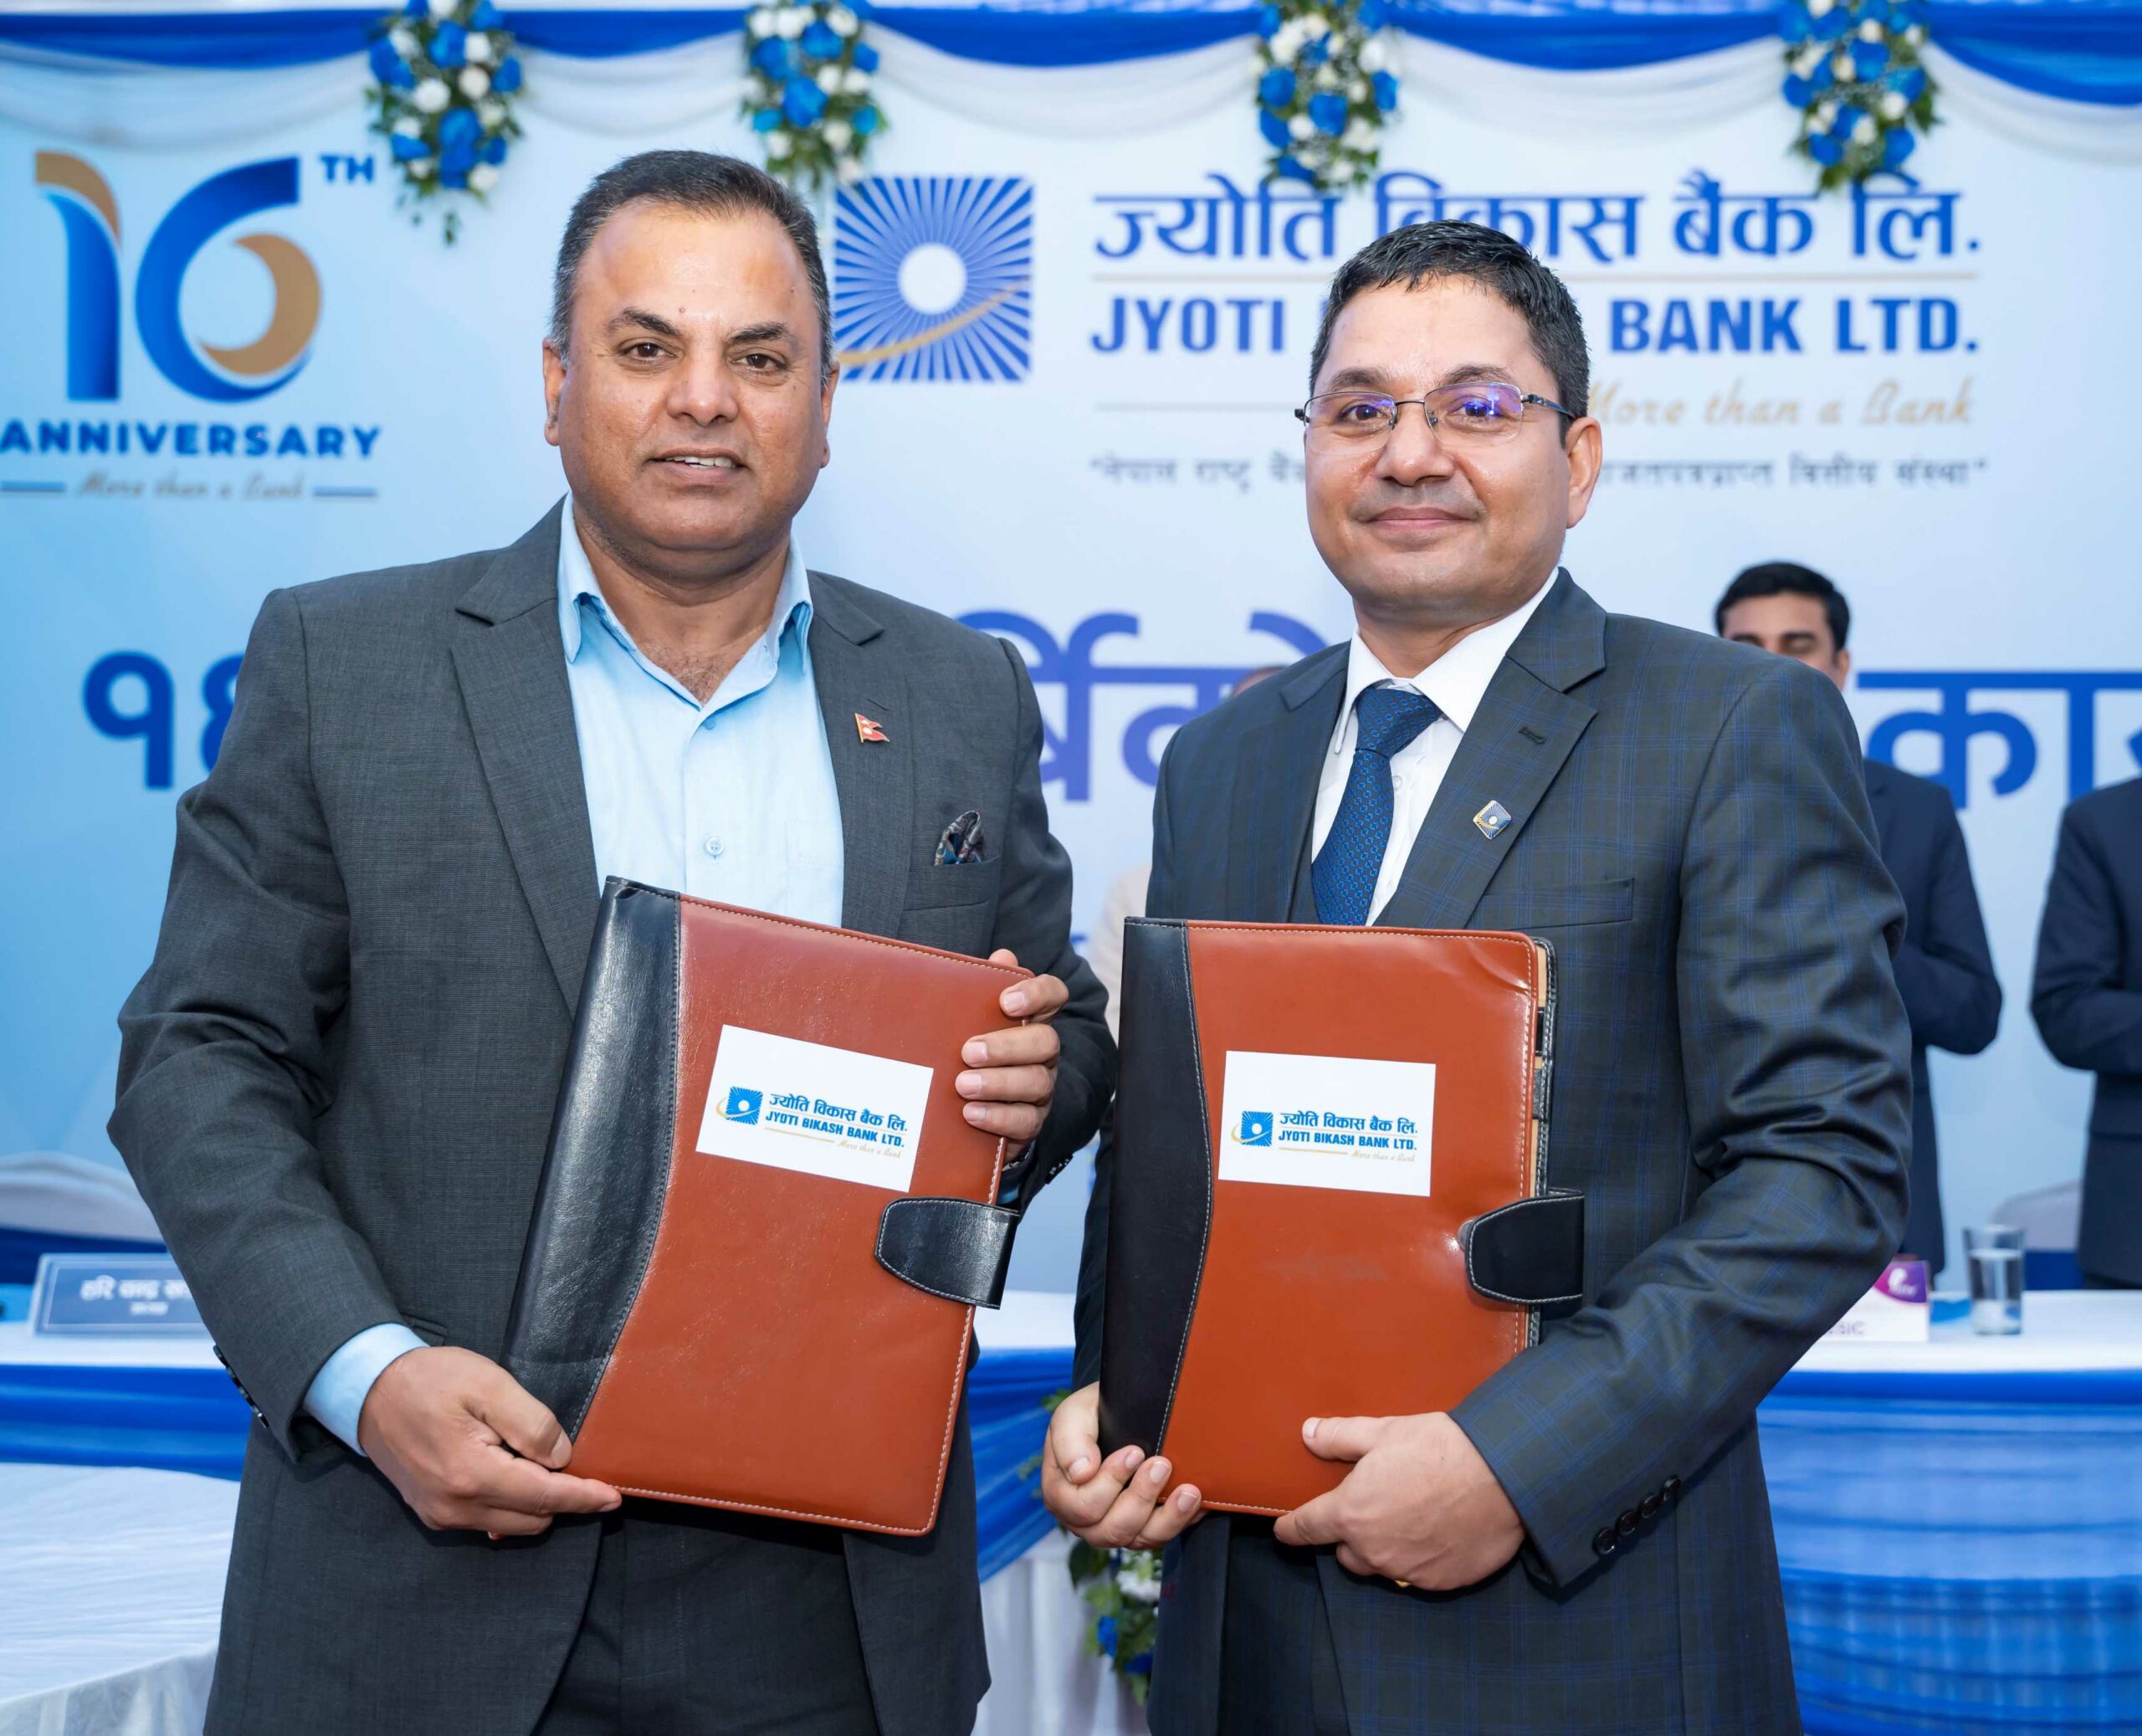 JBBL signs agreements for various CSR programs